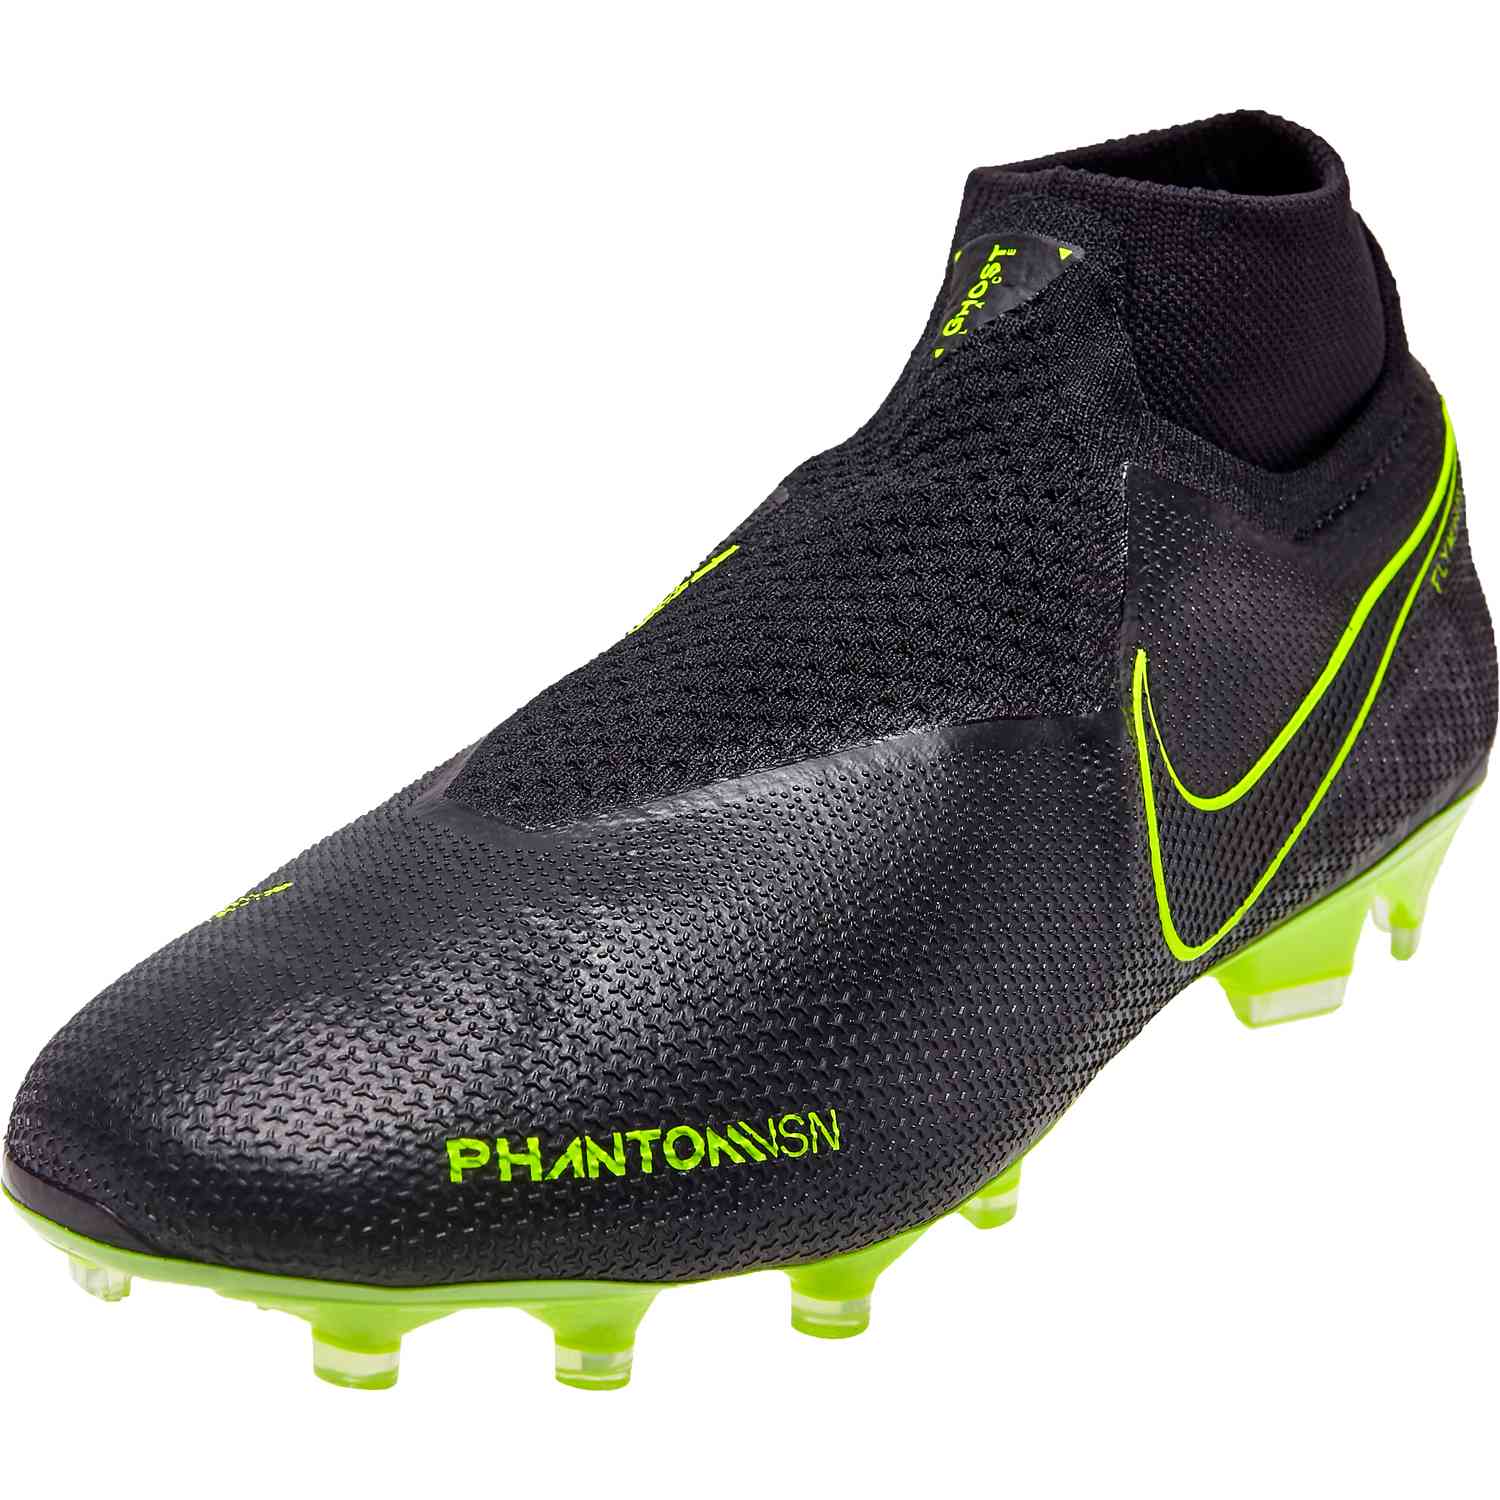 Nike Phantom Vision Elite FG - Under 